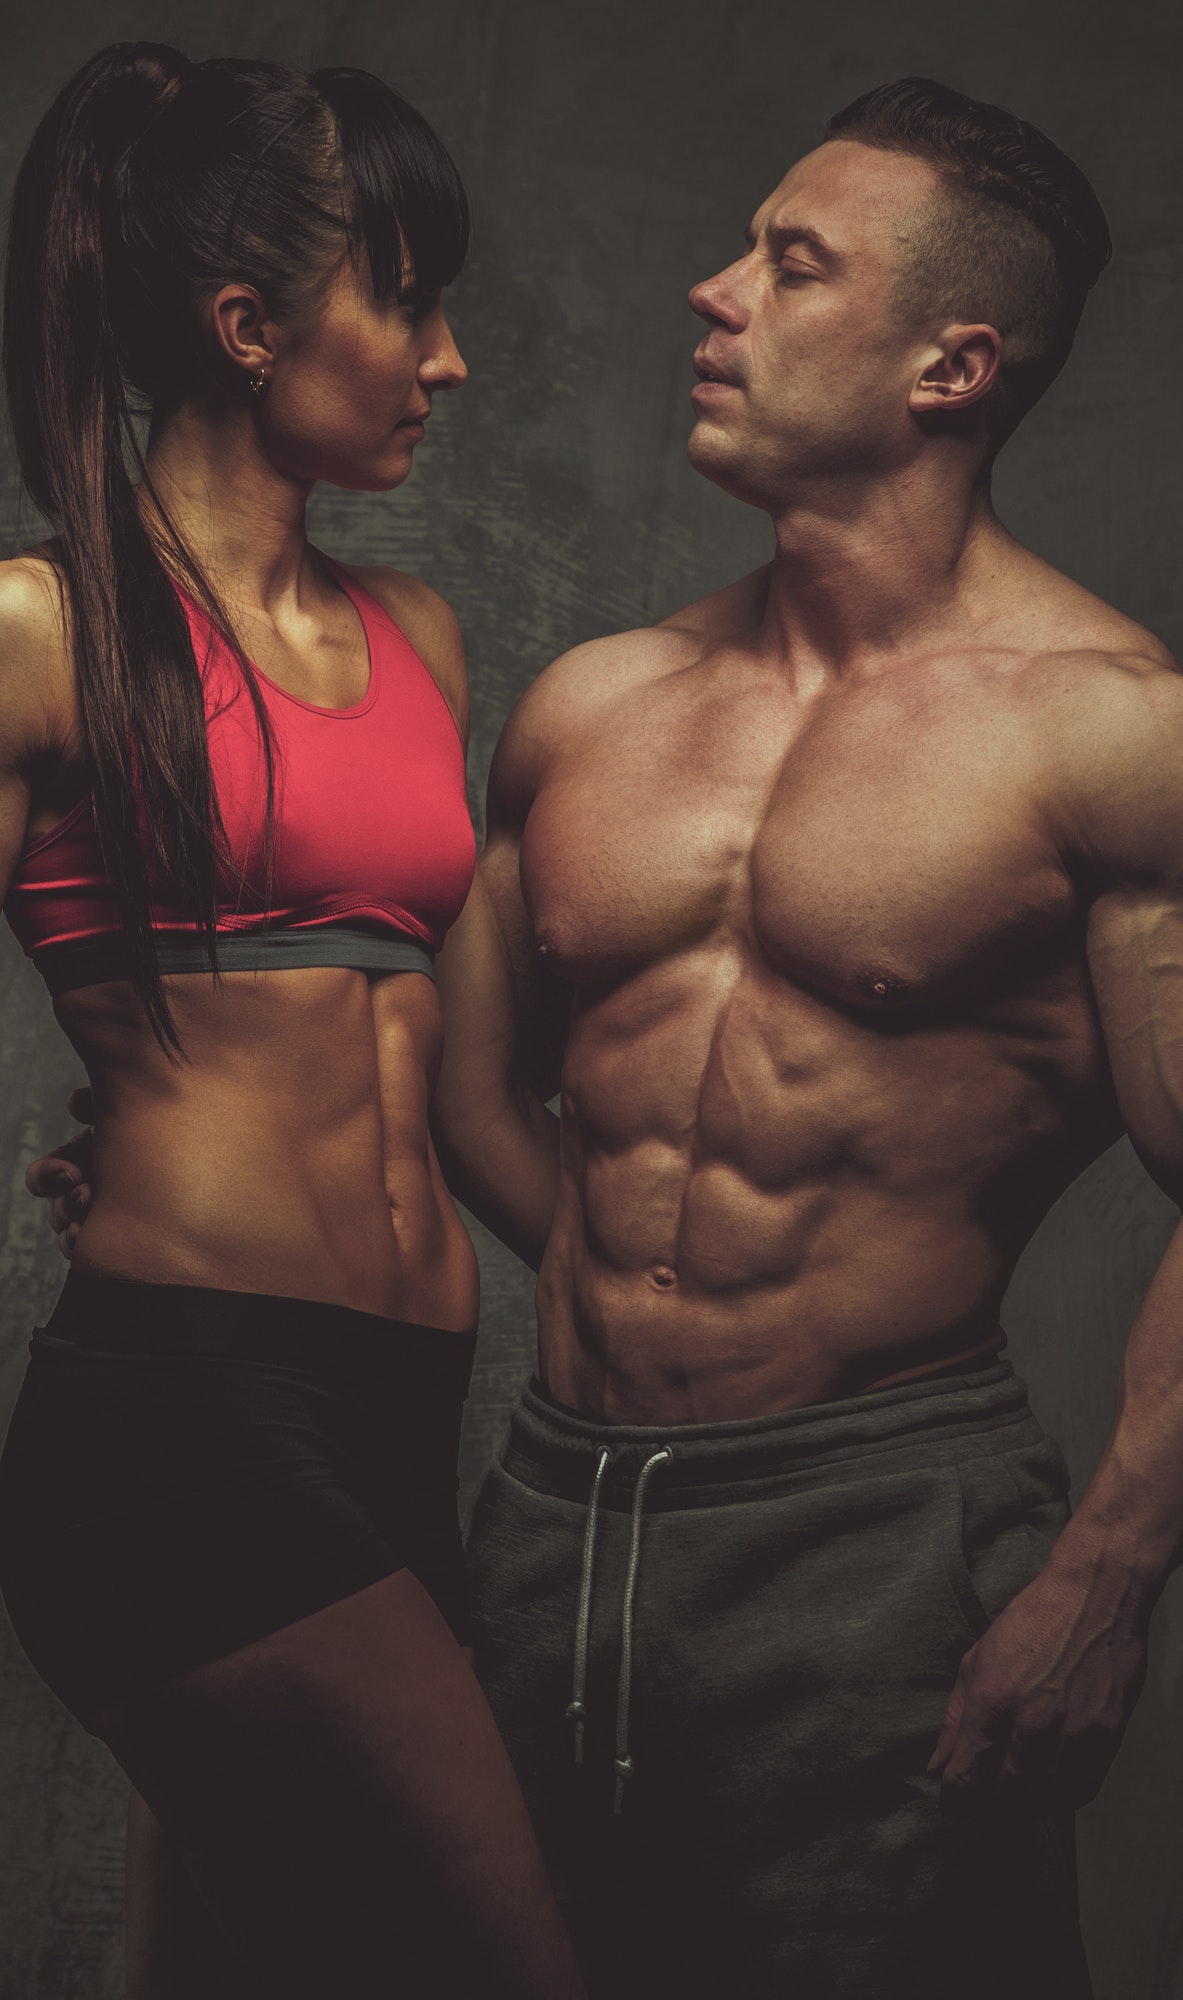 Woman and man bodybuilders posing in studio